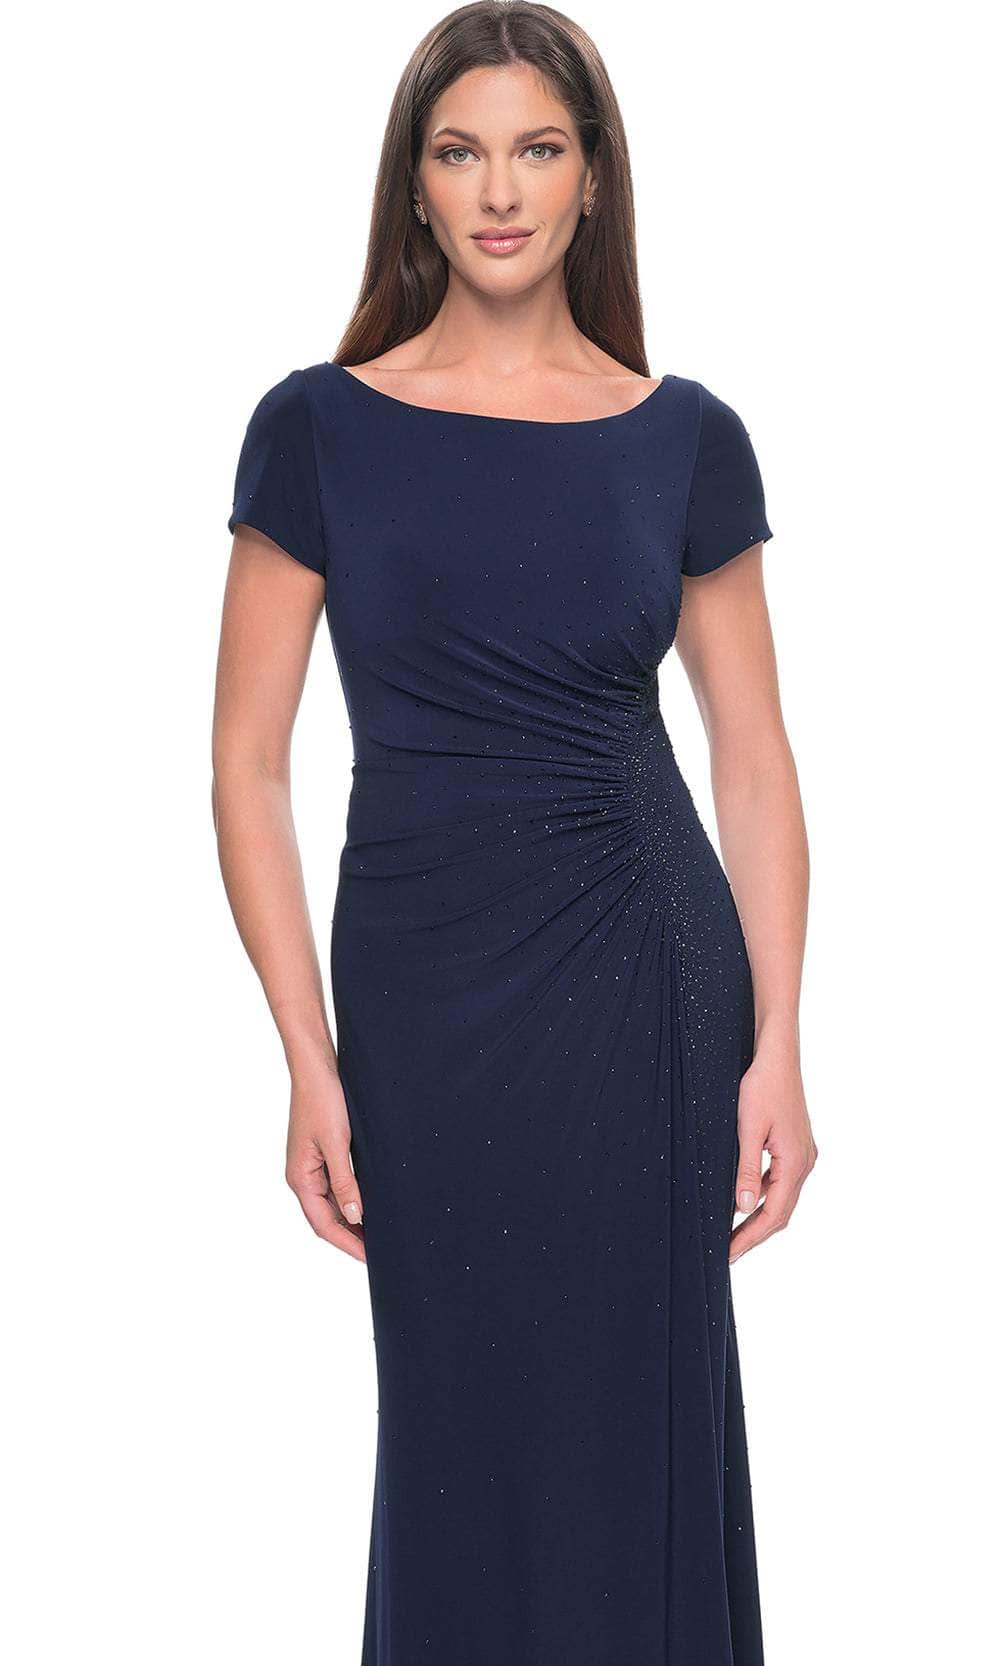 La Femme 31773 - Rhinestone Sheath Formal Dress Evening Dresses